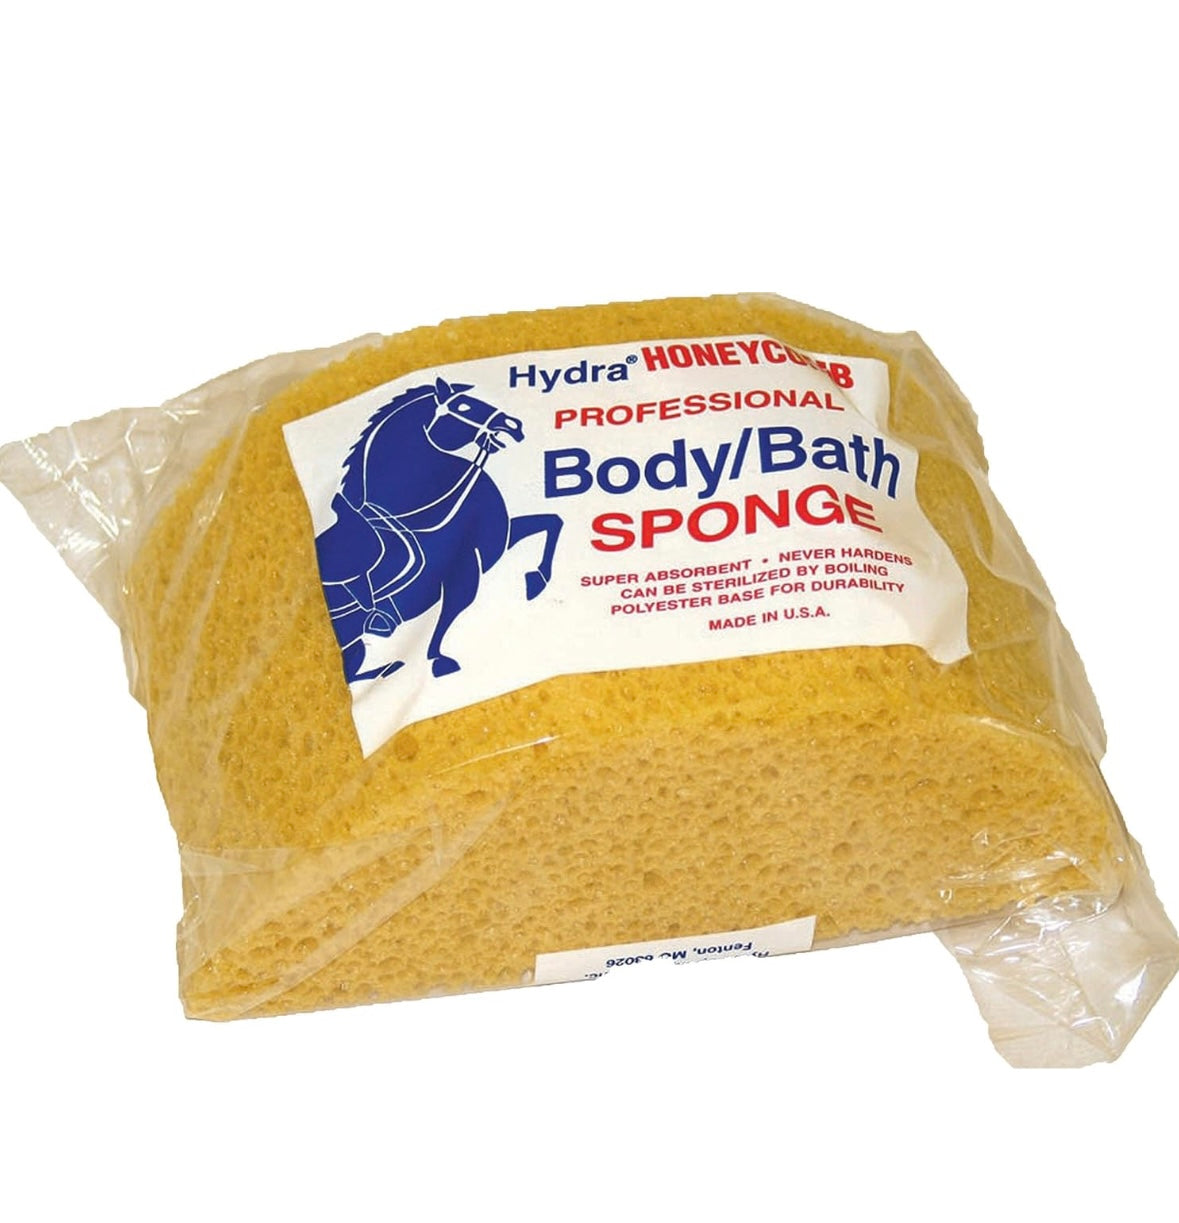 Hydra Honeycomb Professional Body/Bath Sponge